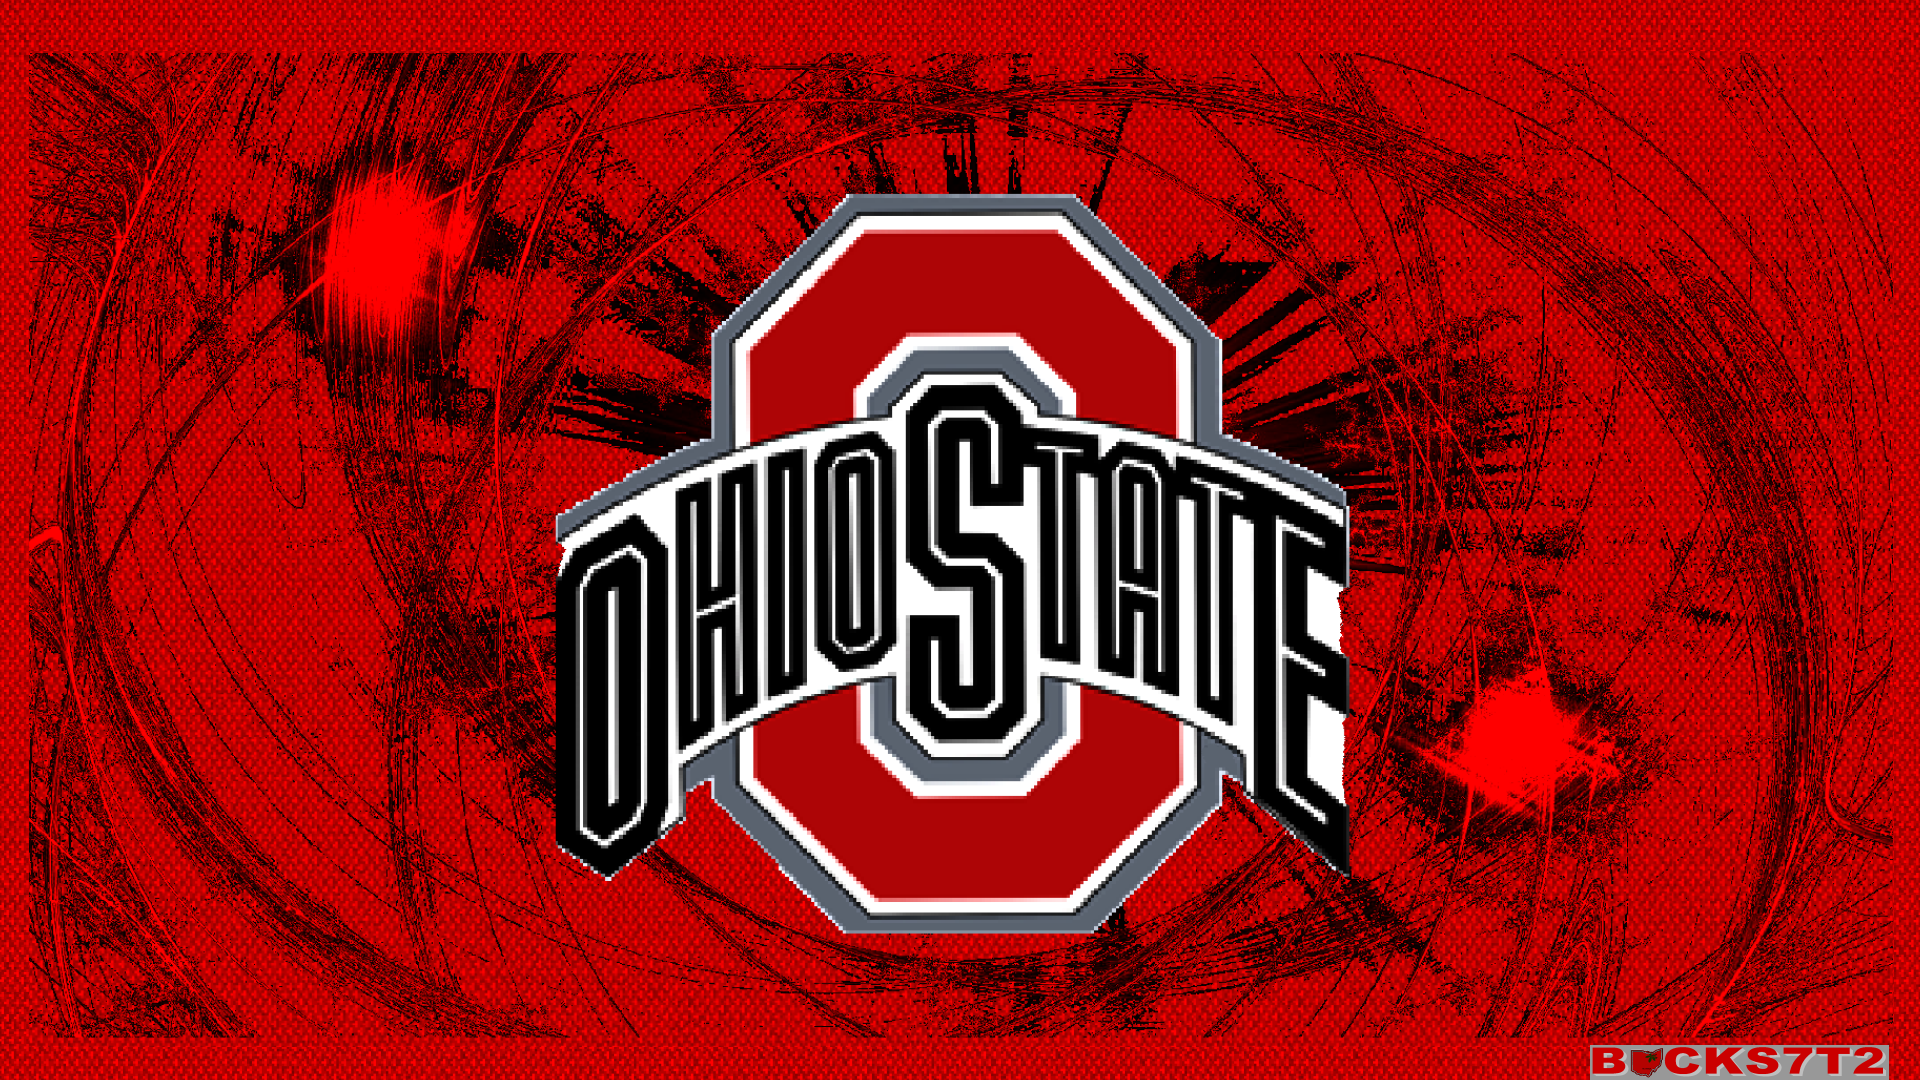 Red Block O Ohio State University Basketball Wallpaper